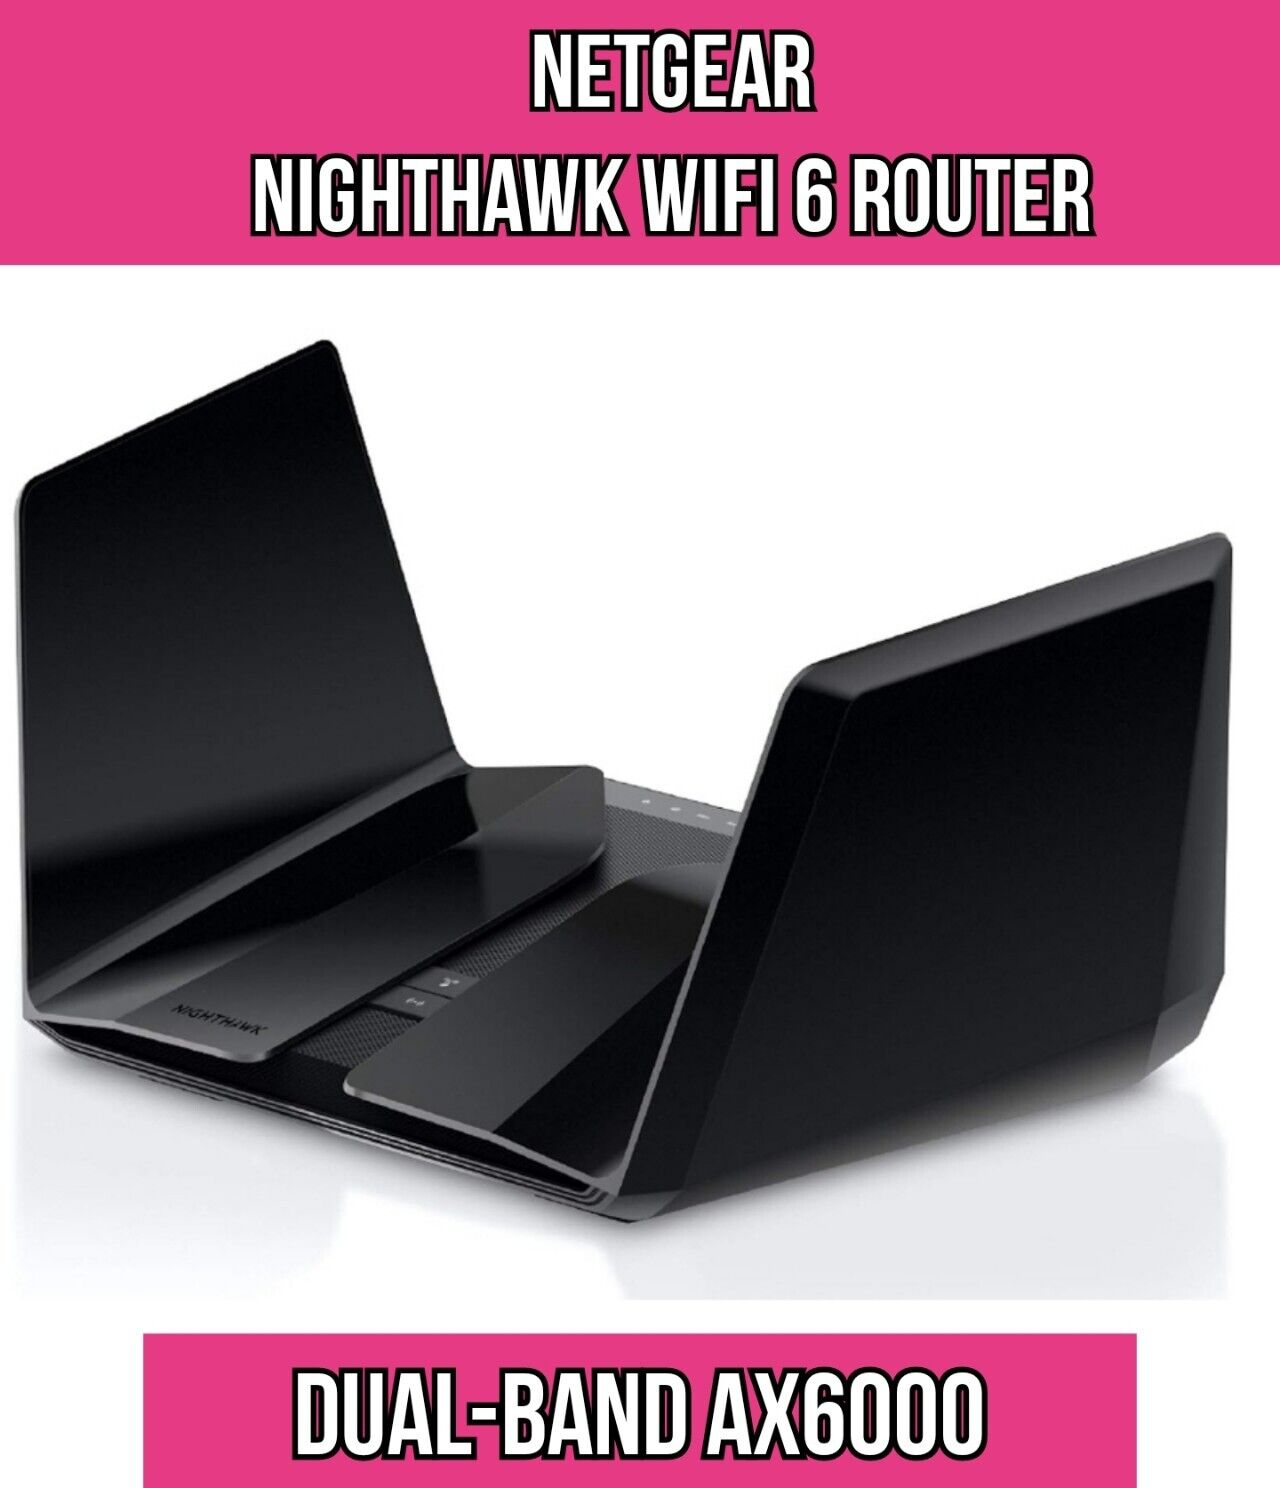 NETGEAR Nighthawk WiFi 6 Router (RAX120) 12-Stream Dual-Band Gigabit Router NETGEAR RAX120-100NAS